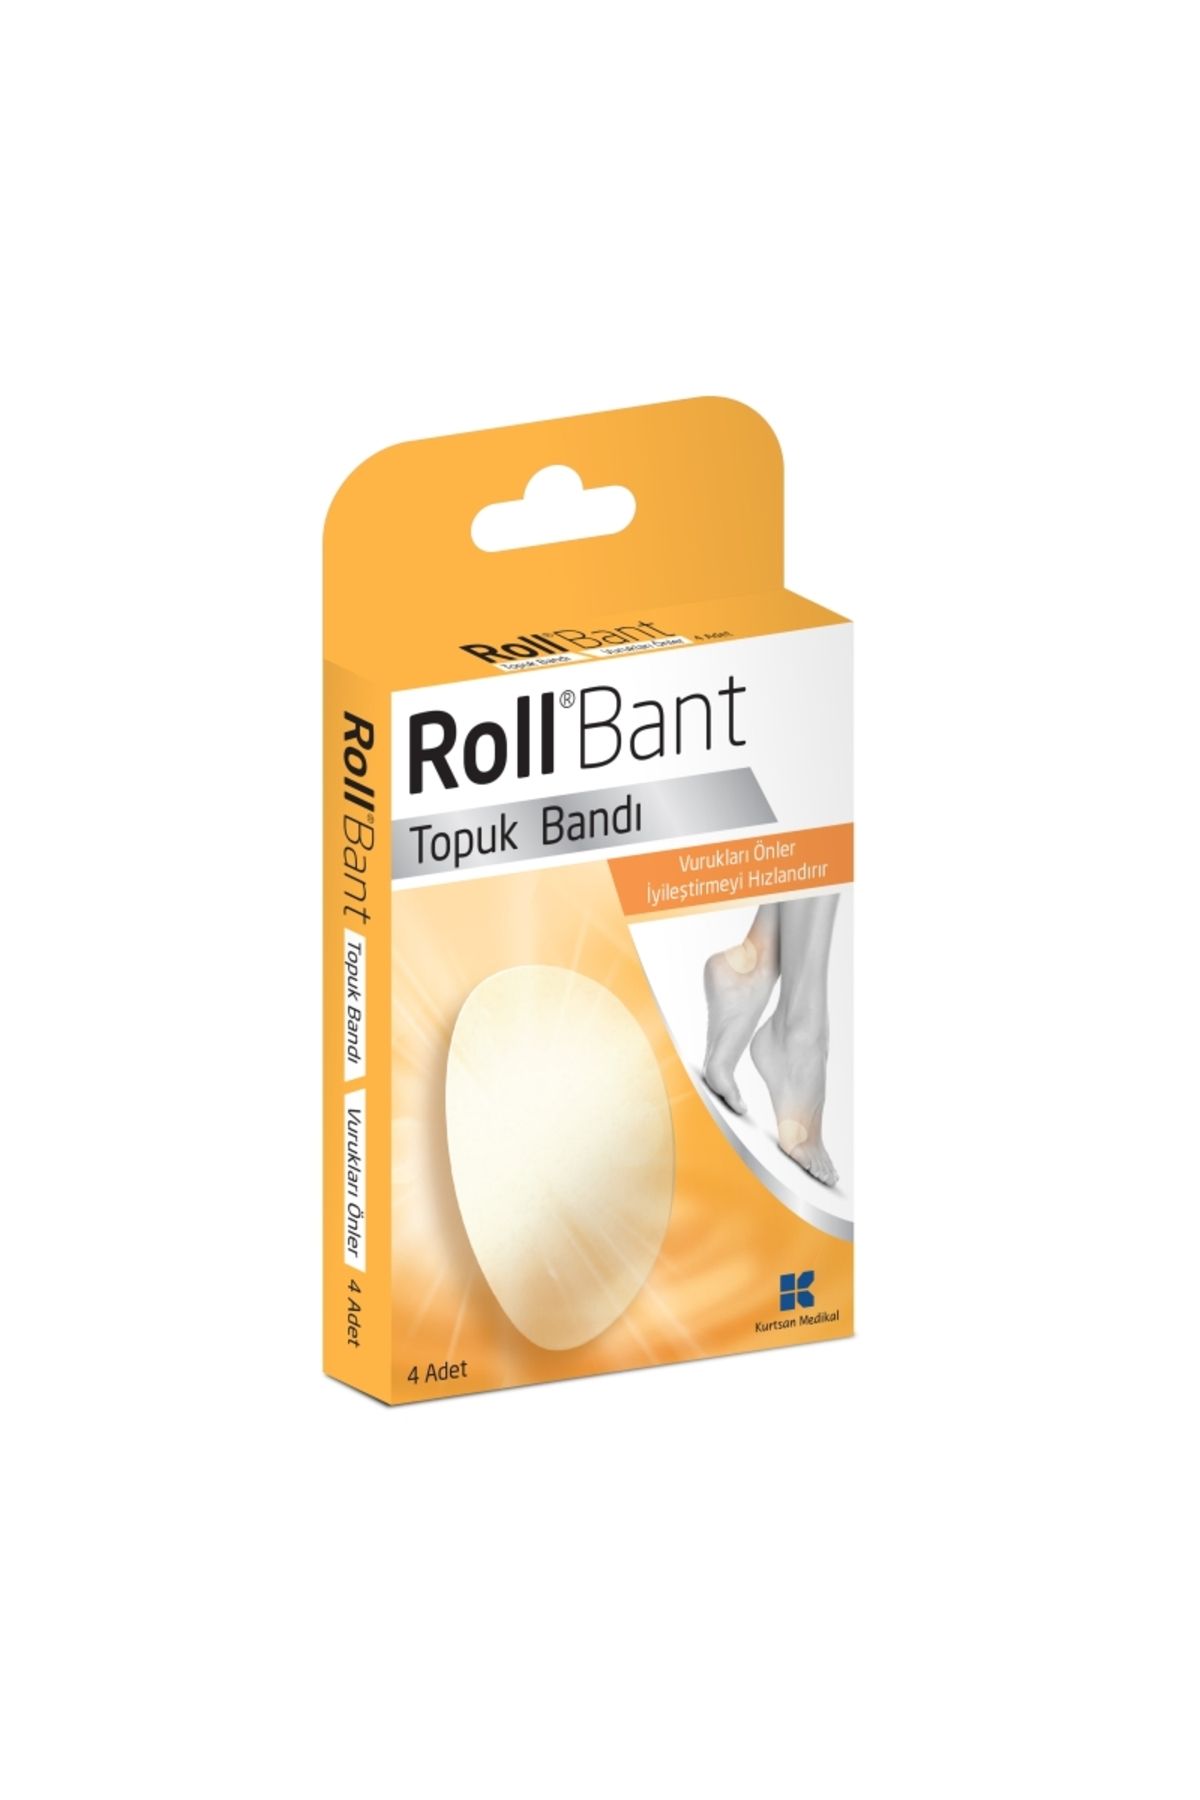 Roll Bant Topuk Bandı 8 Adet 2 Kutu